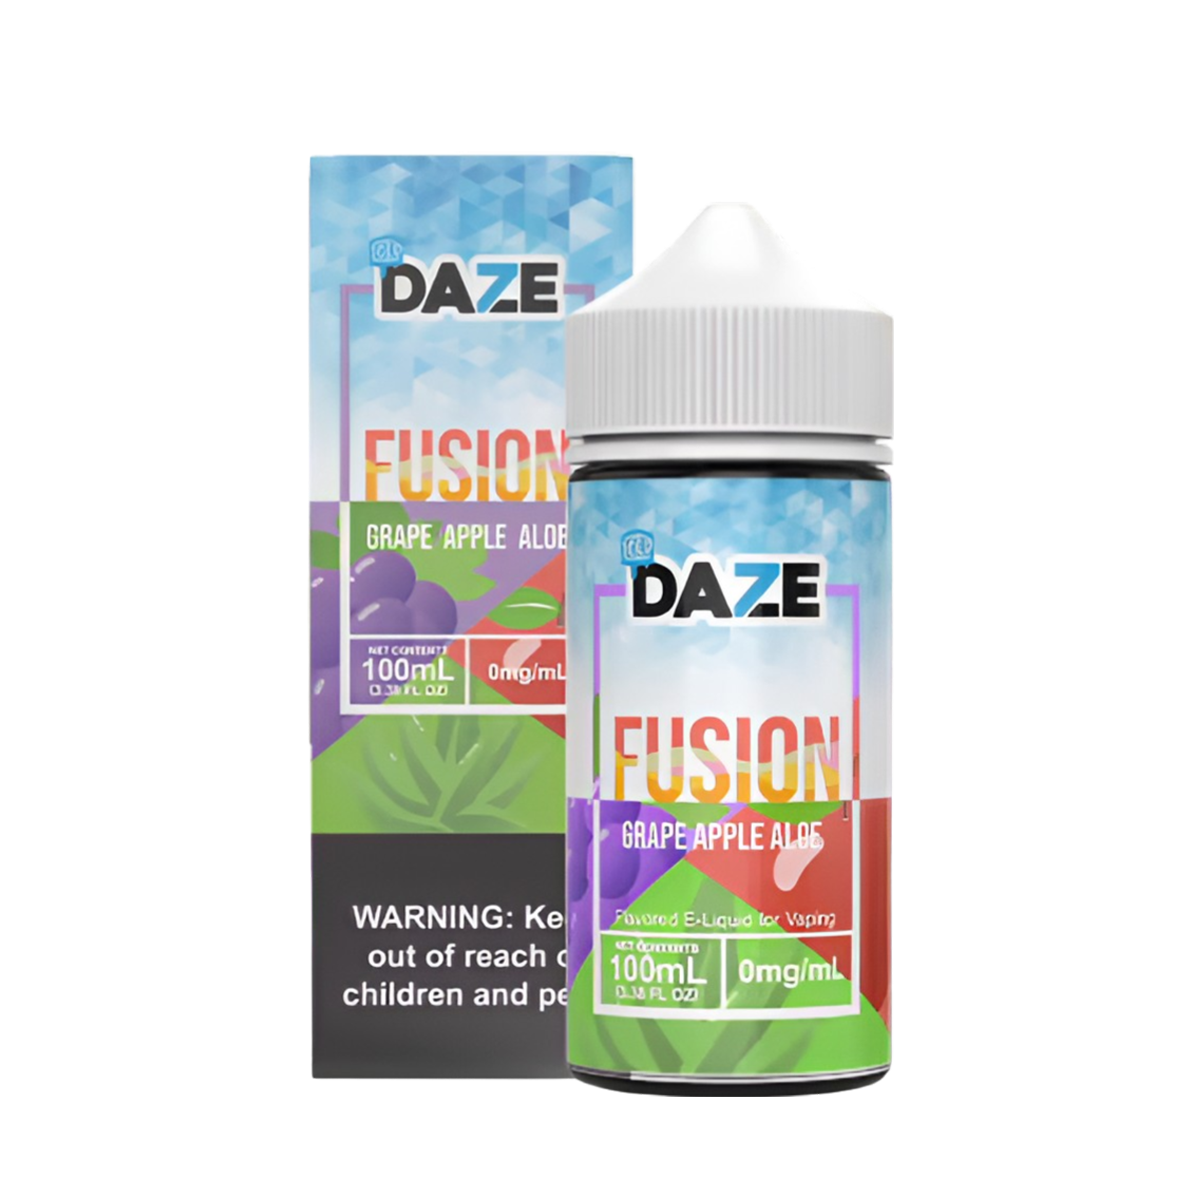 7 Daze Fusion Iced Freebase Vape Juice 0 Mg 100 ML Grape Apple Aloe Iced